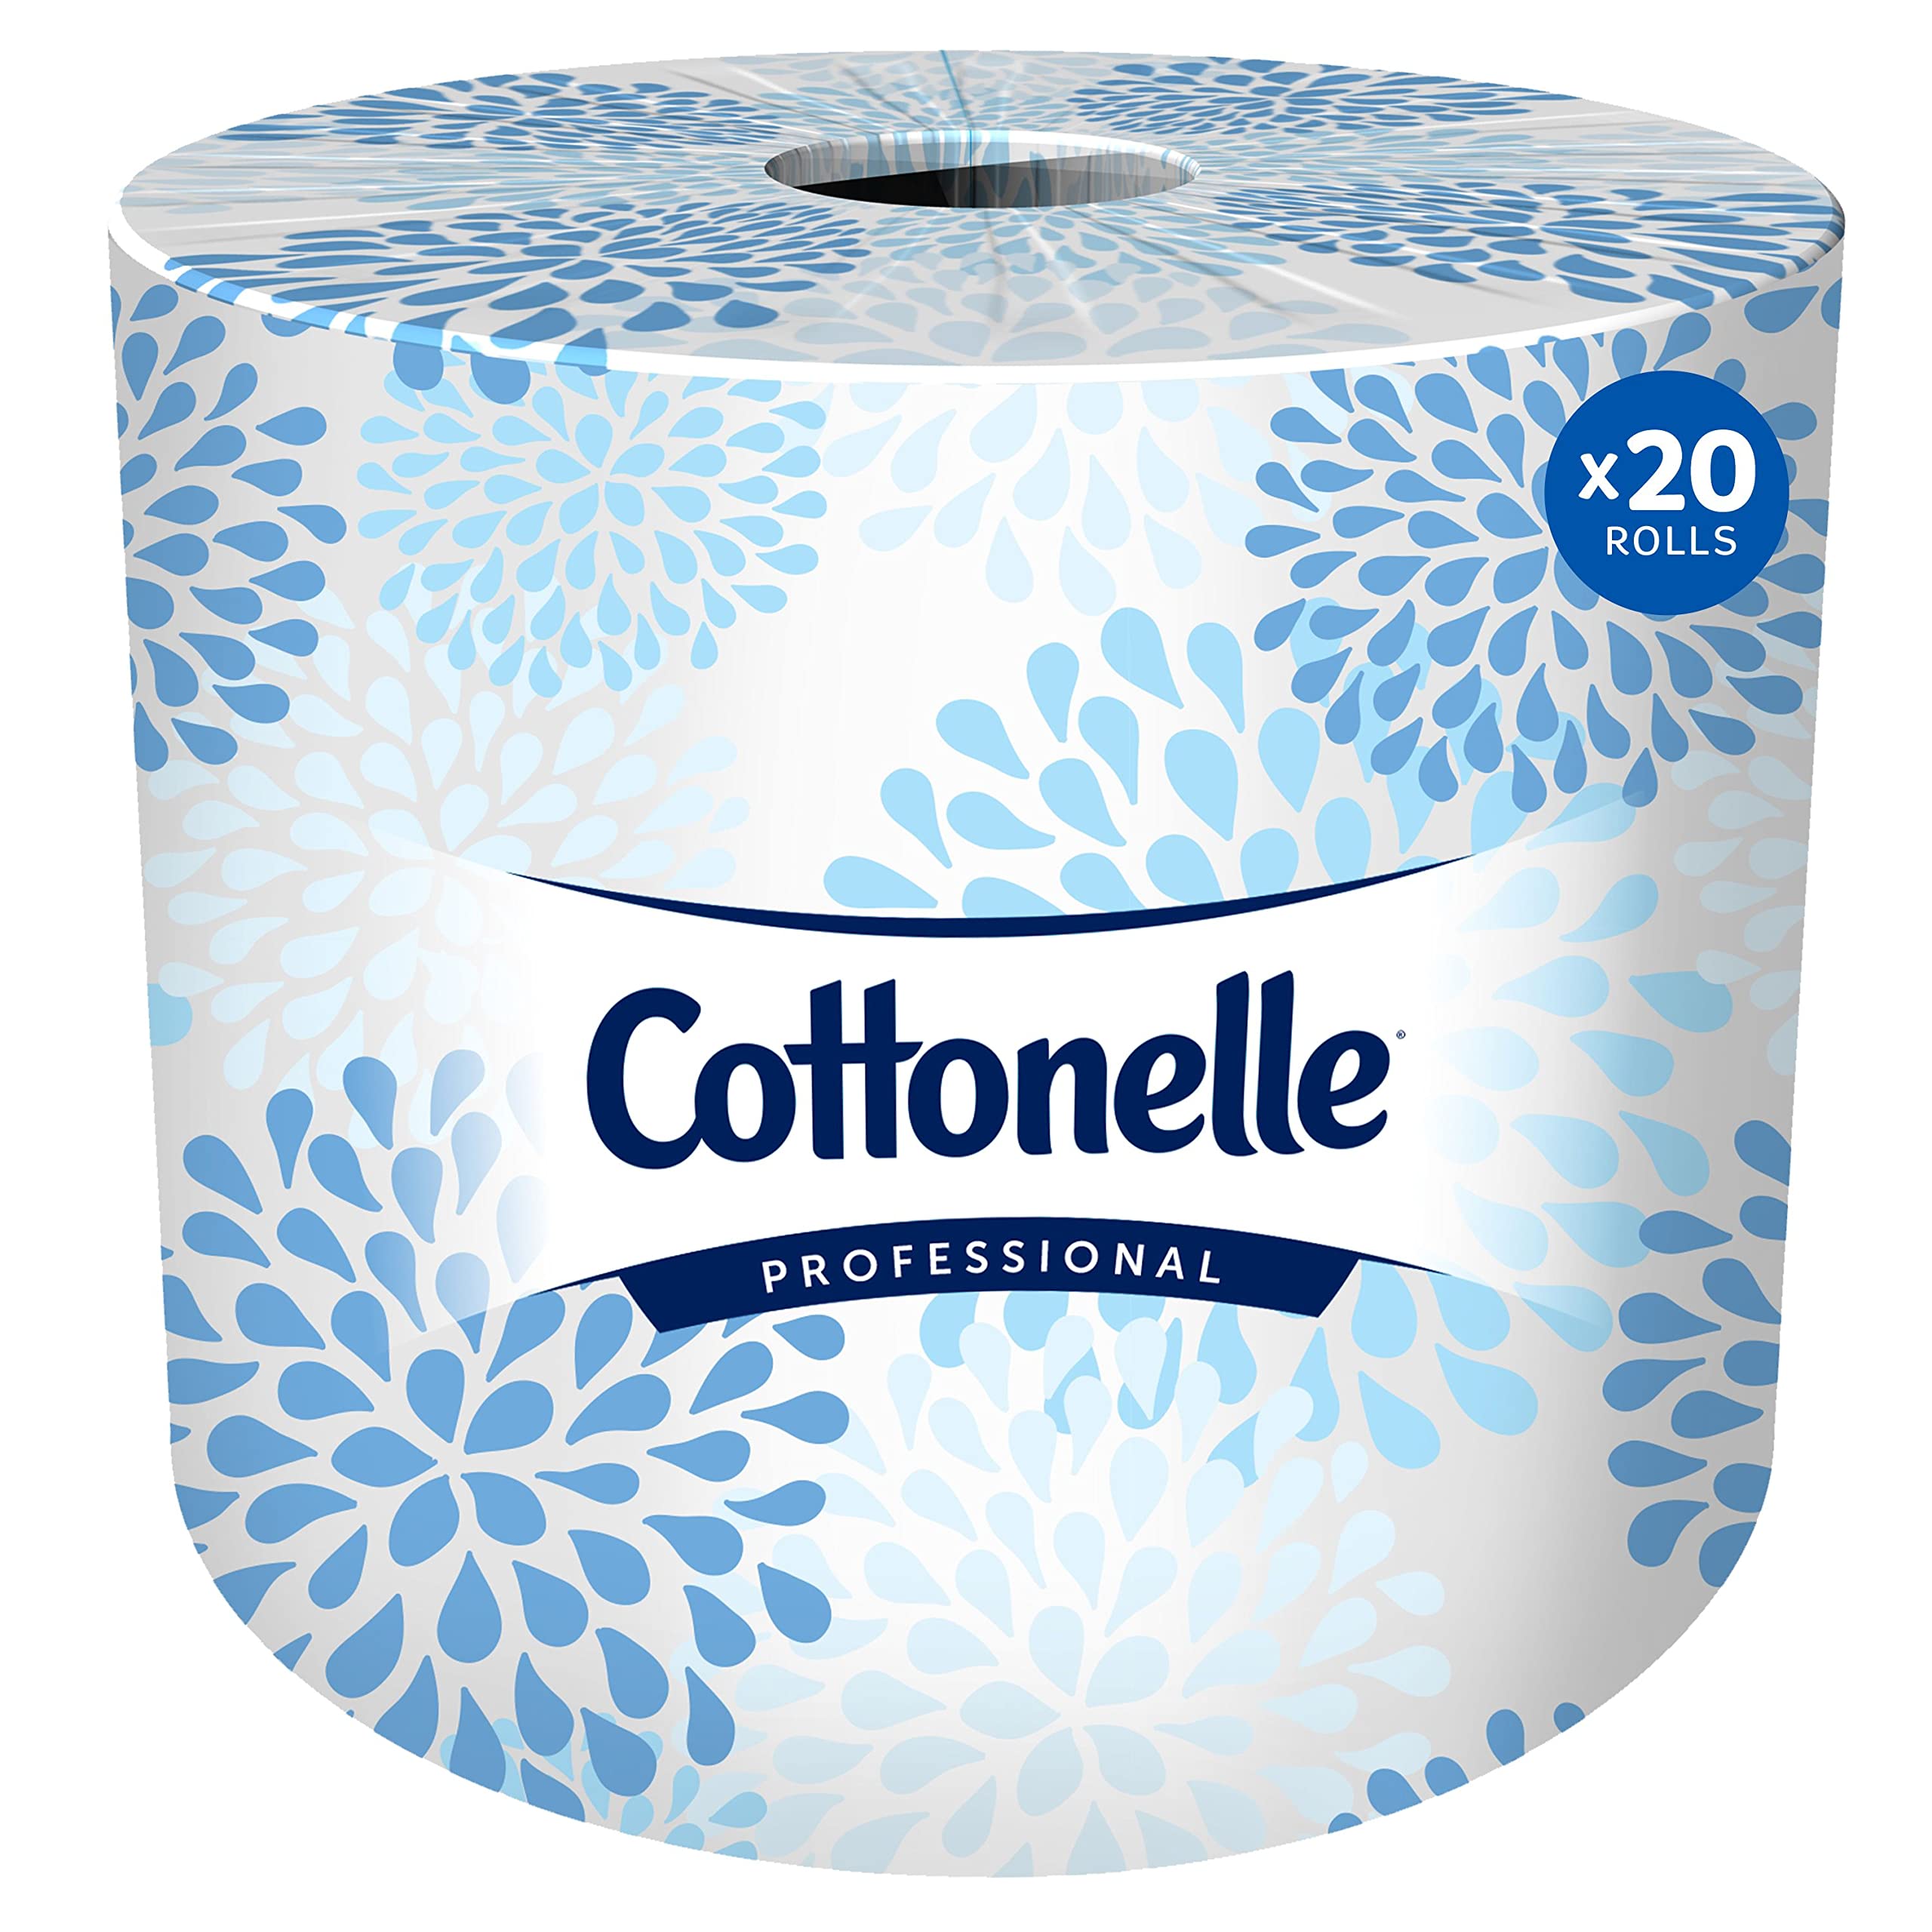 Cottonelle 专业标准卷筒卫生纸